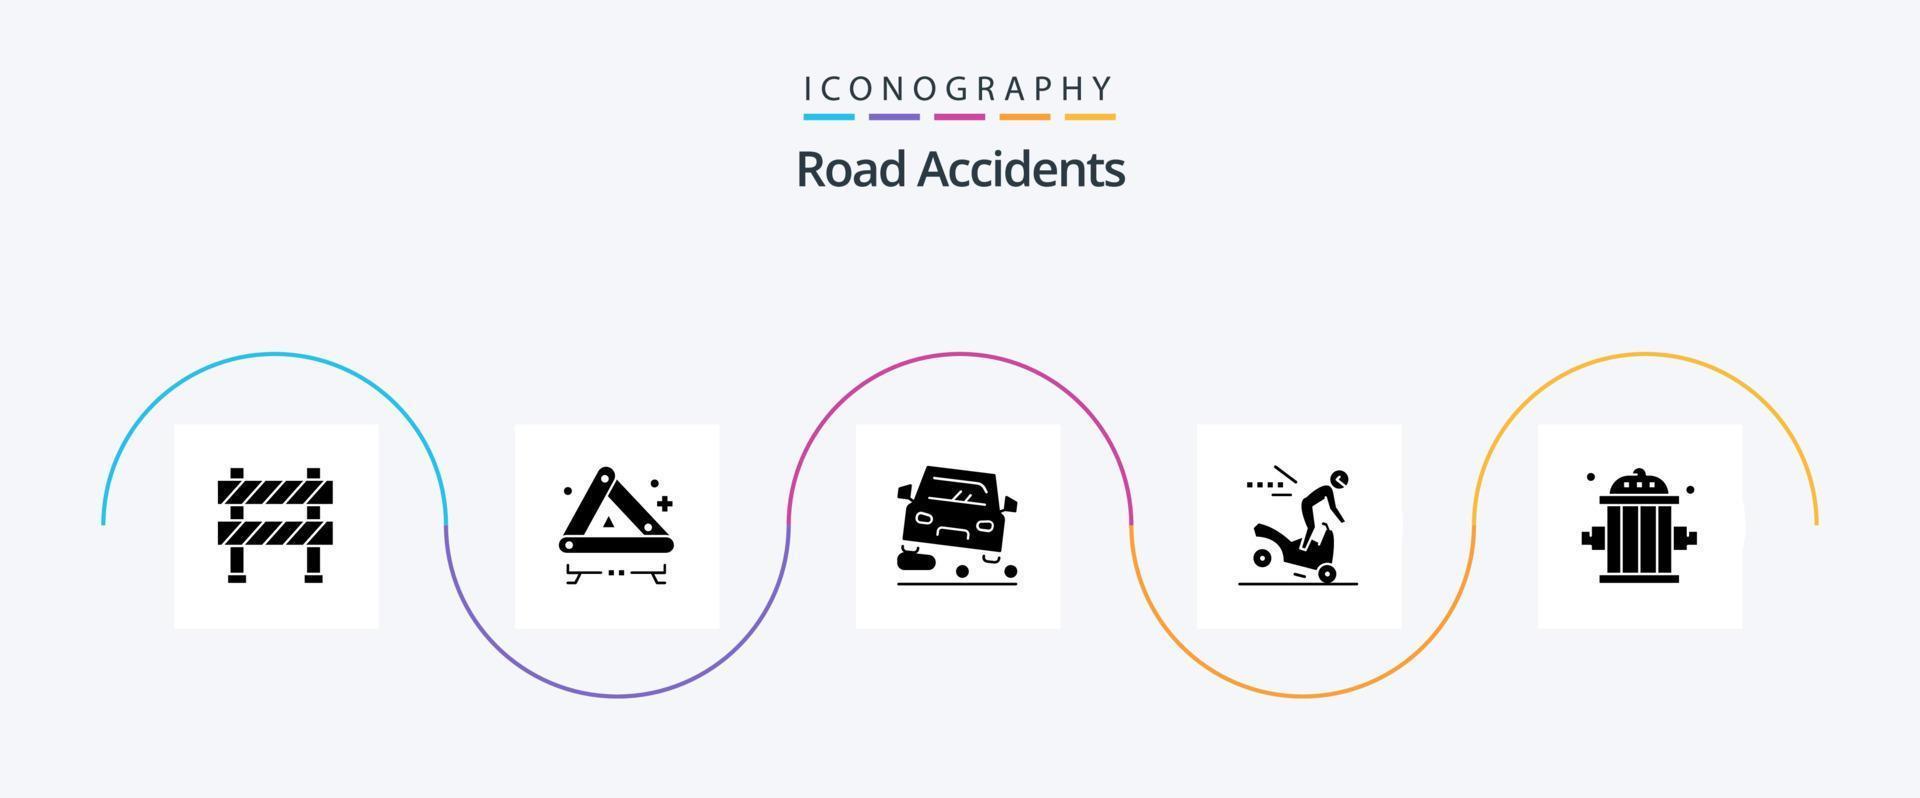 paquete de iconos de glifo 5 de accidentes de tráfico que incluye bombero. moto. signo. peligro. mermelada vector